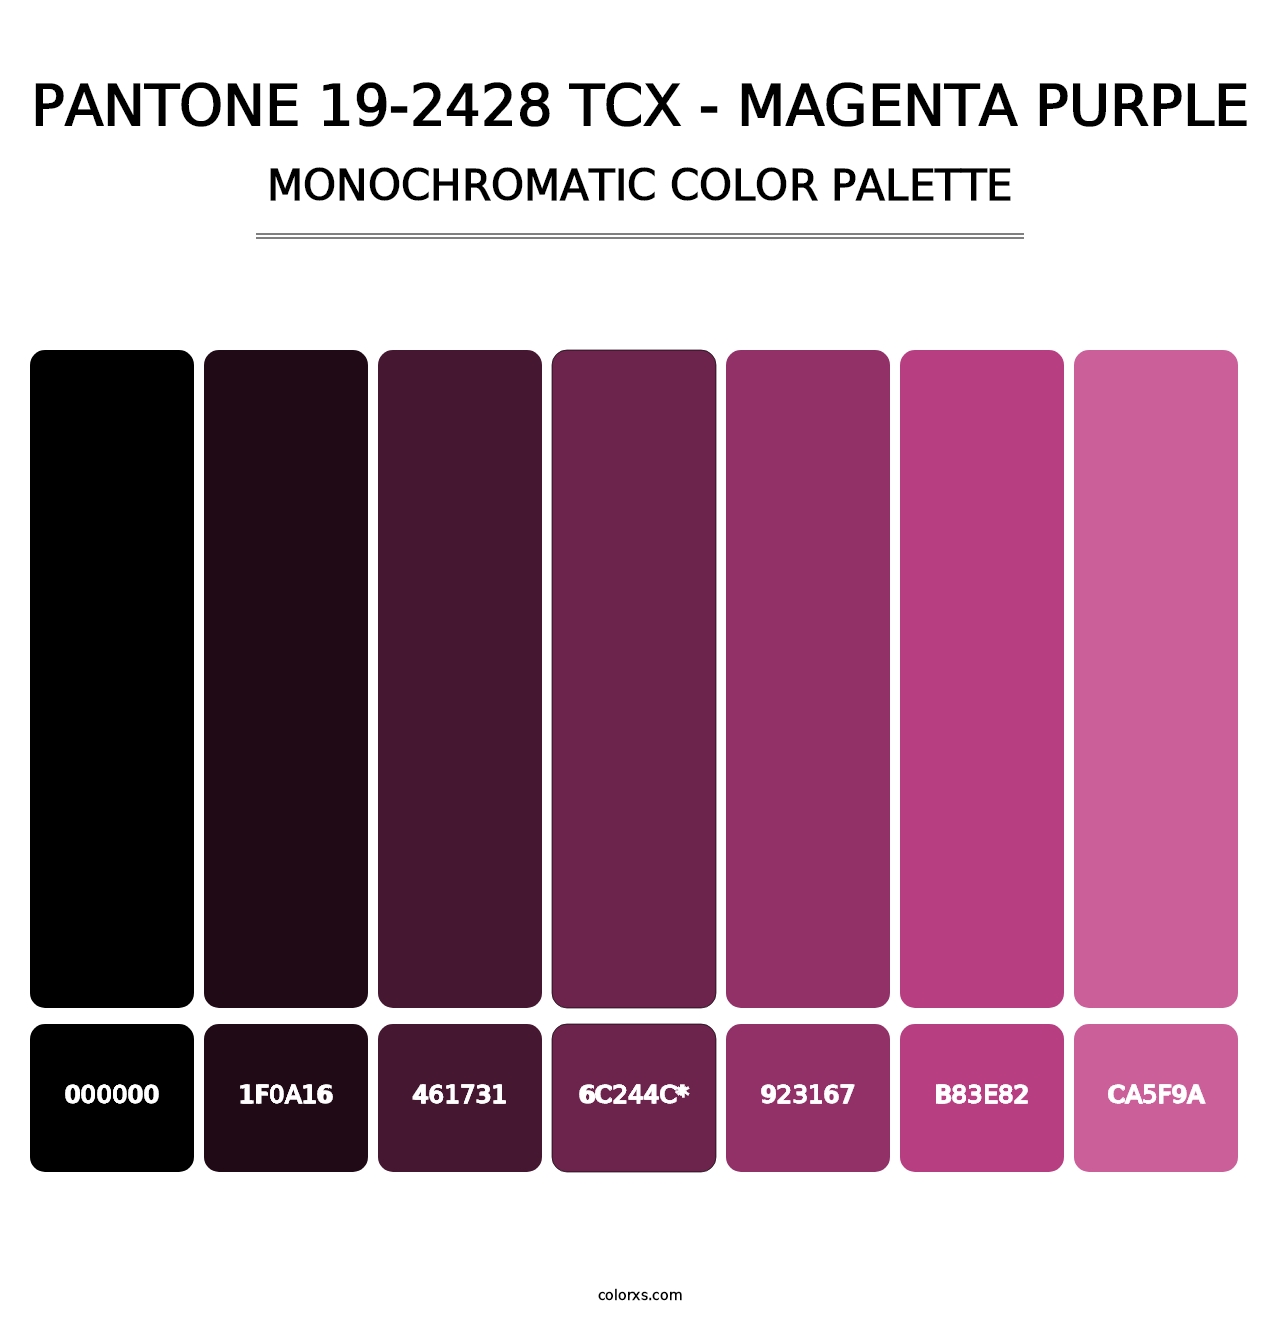 PANTONE 19-2428 TCX - Magenta Purple - Monochromatic Color Palette